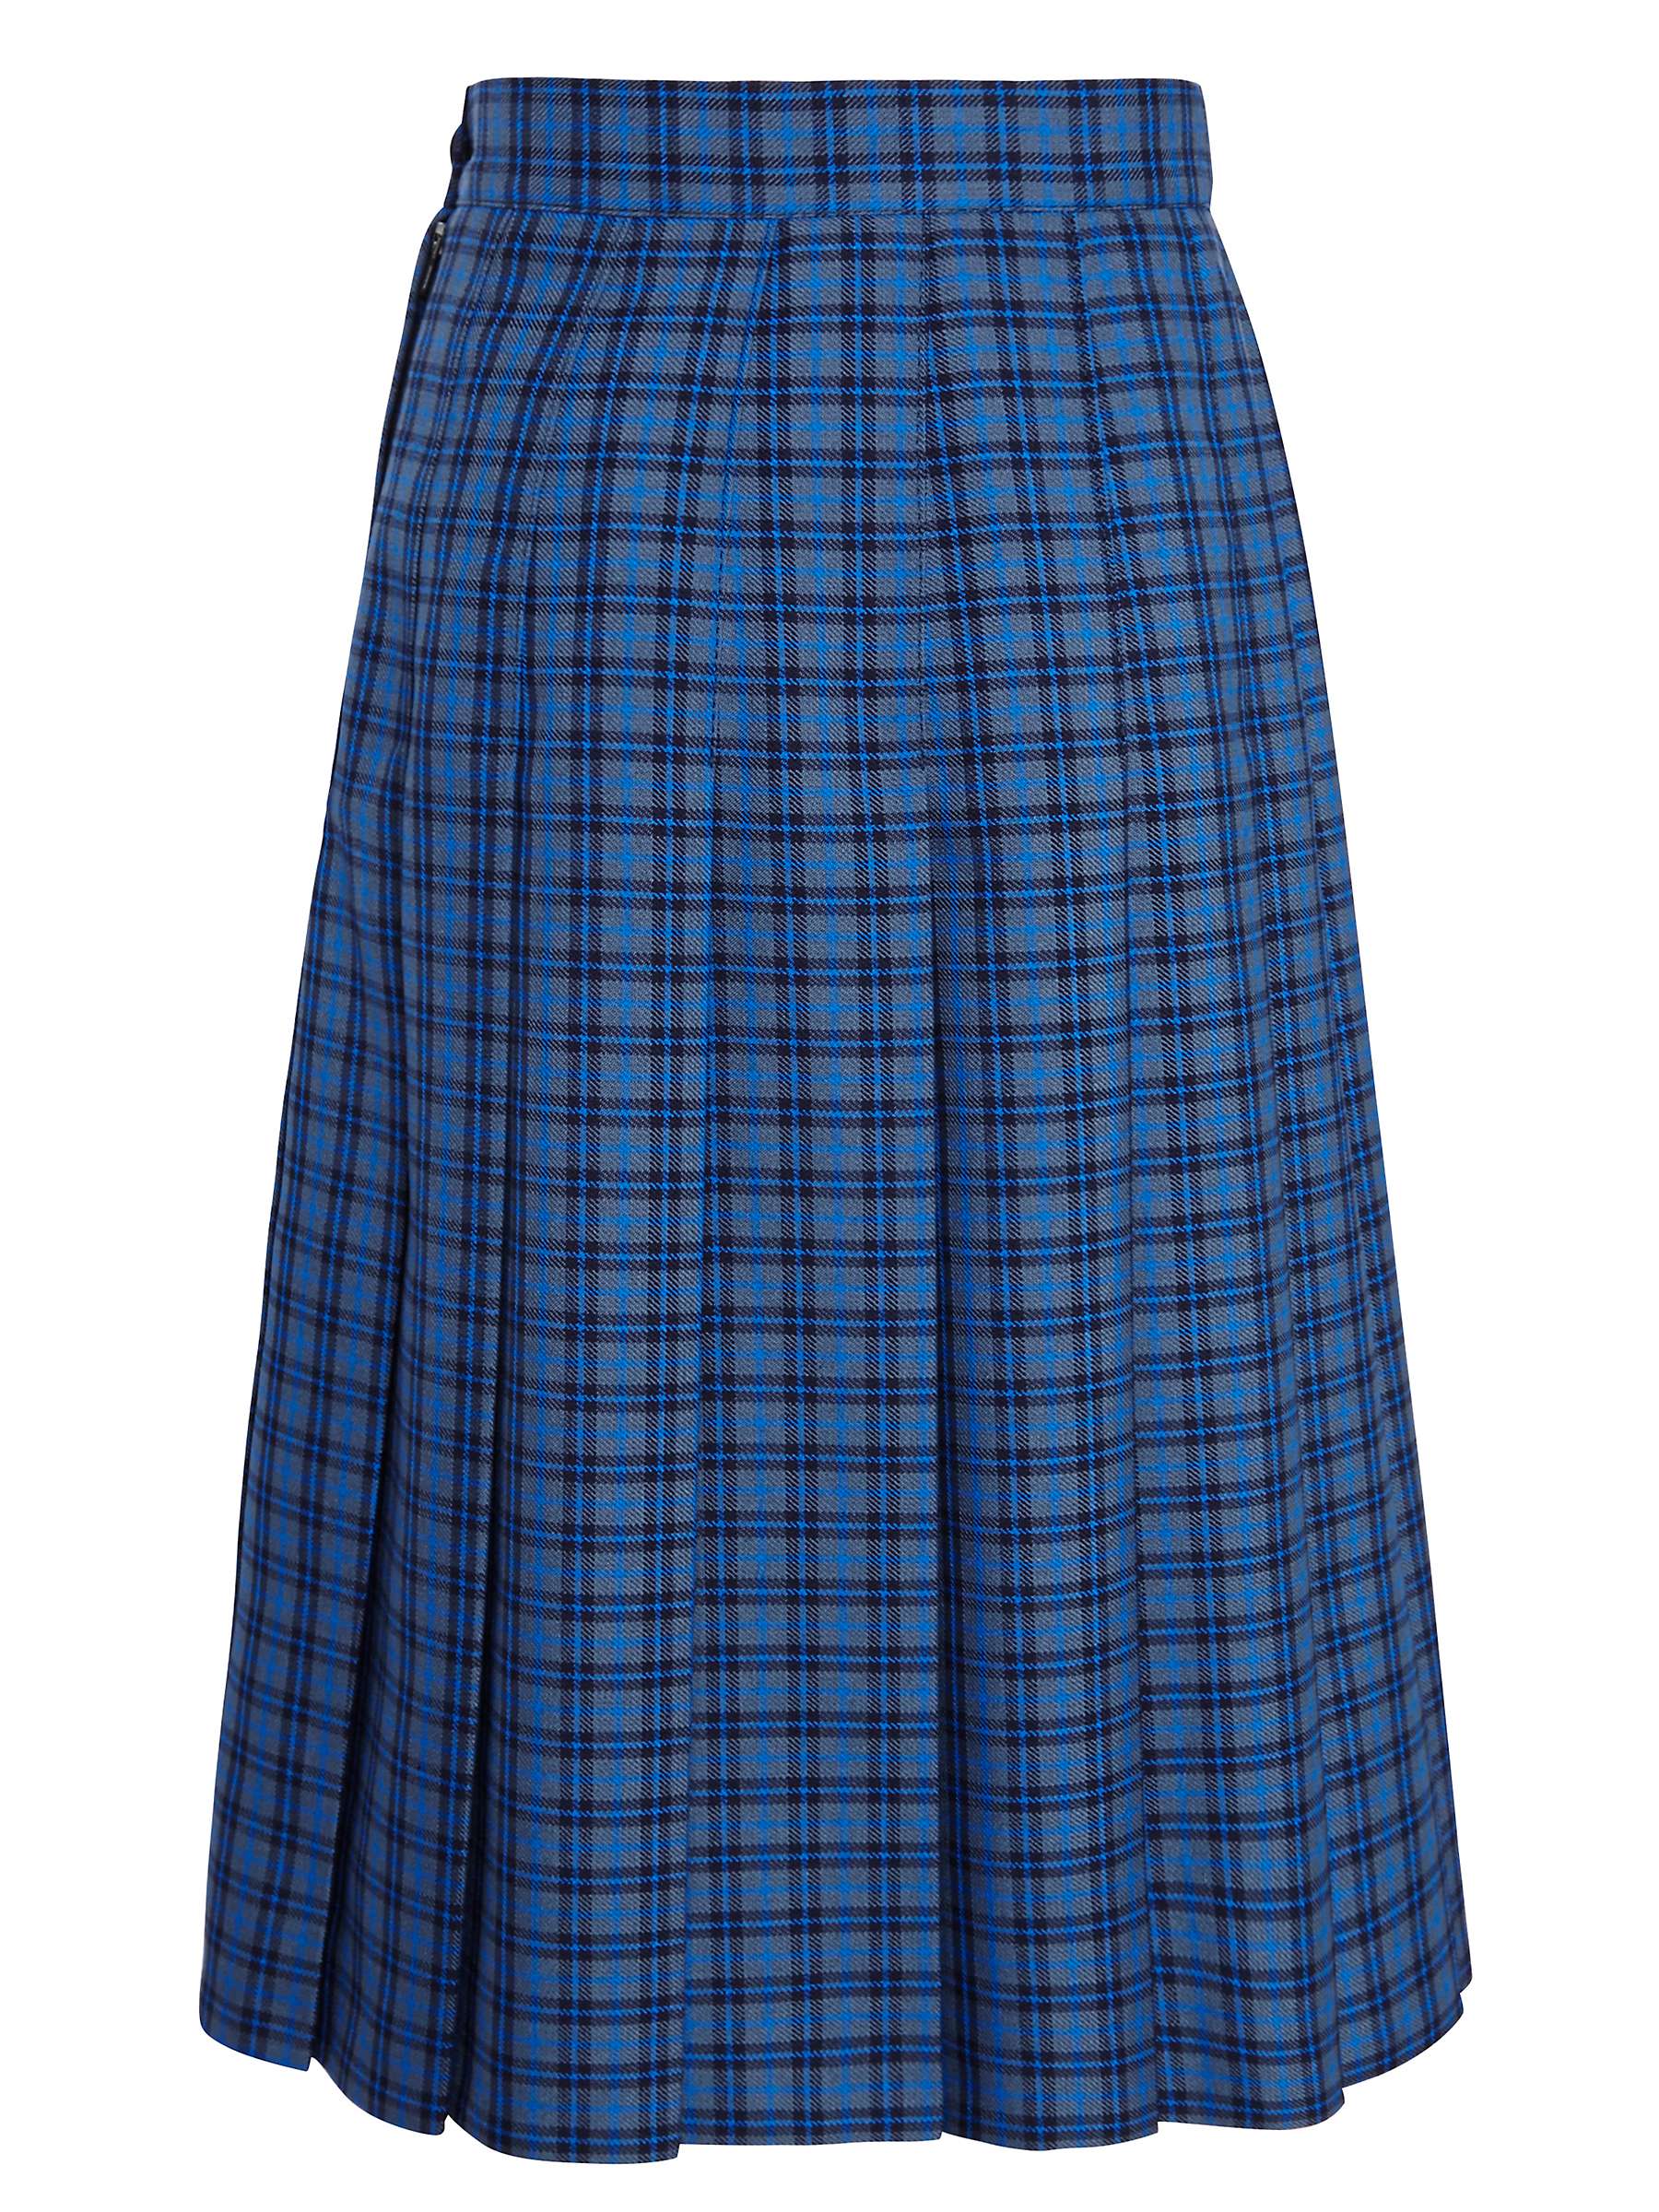 Buy St Mary's School, Cambridge Girls' Skirt, Tartan Online at johnlewis.com